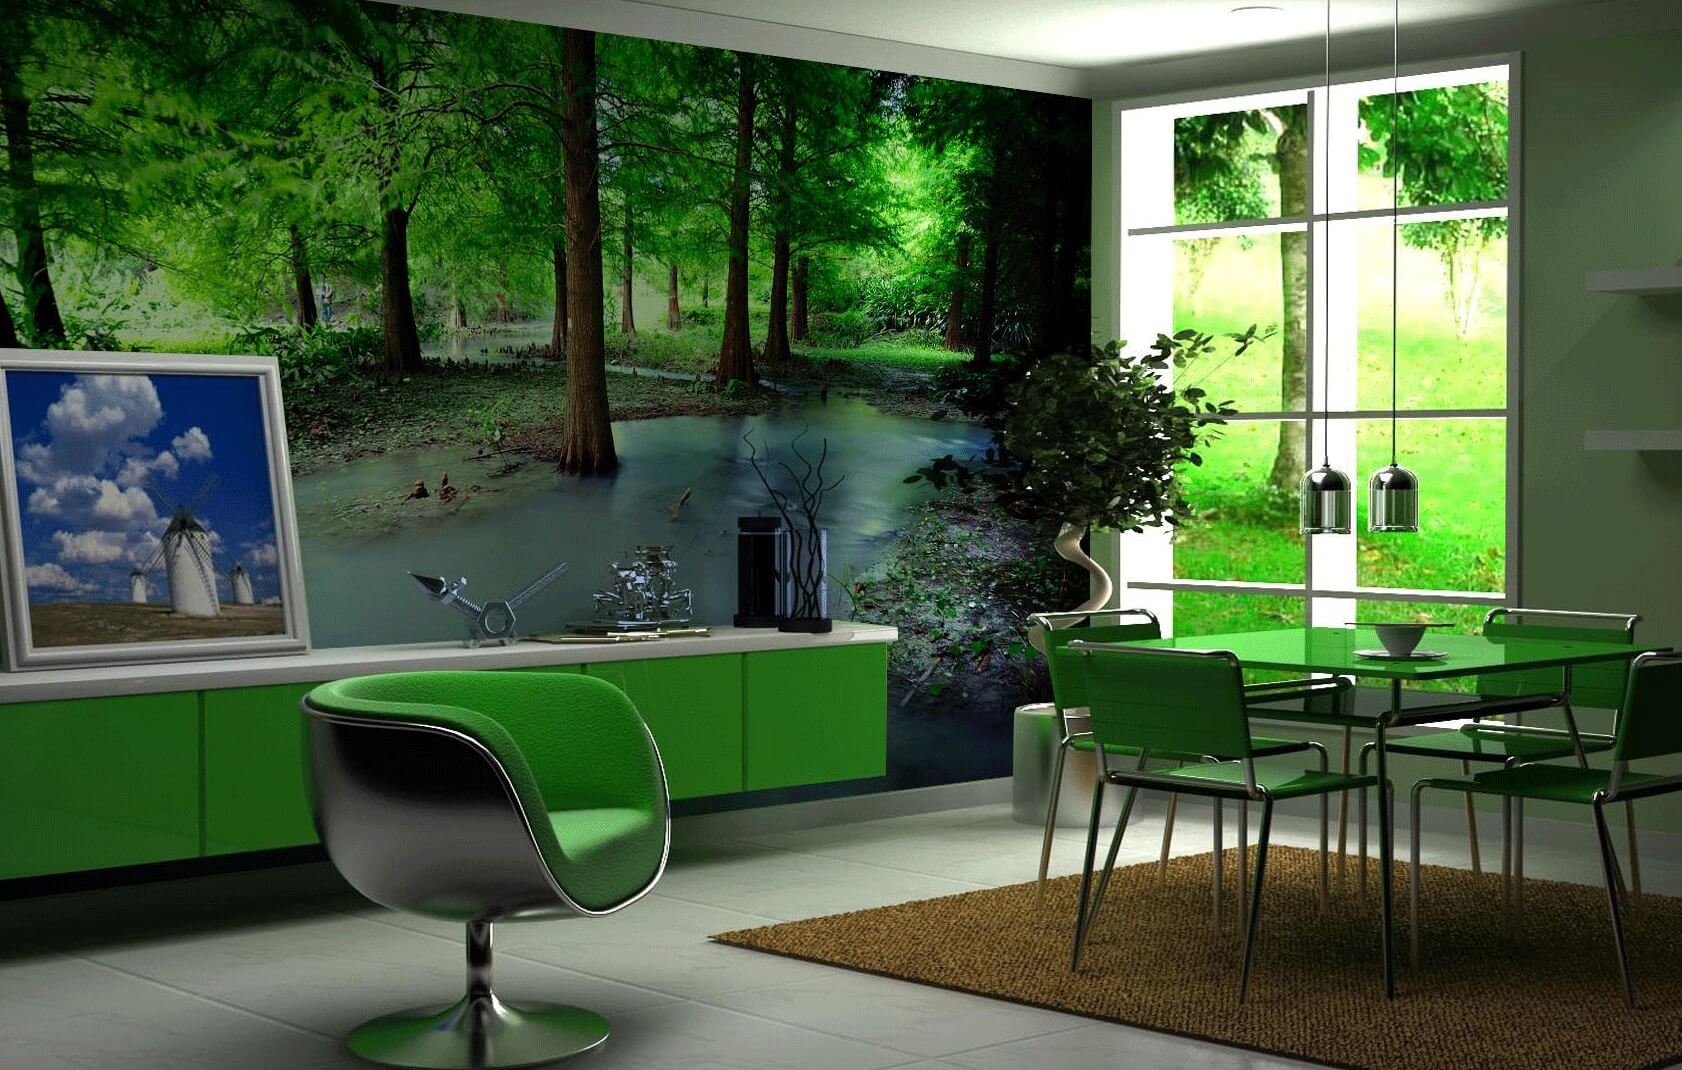 Фотообои зеленая стена